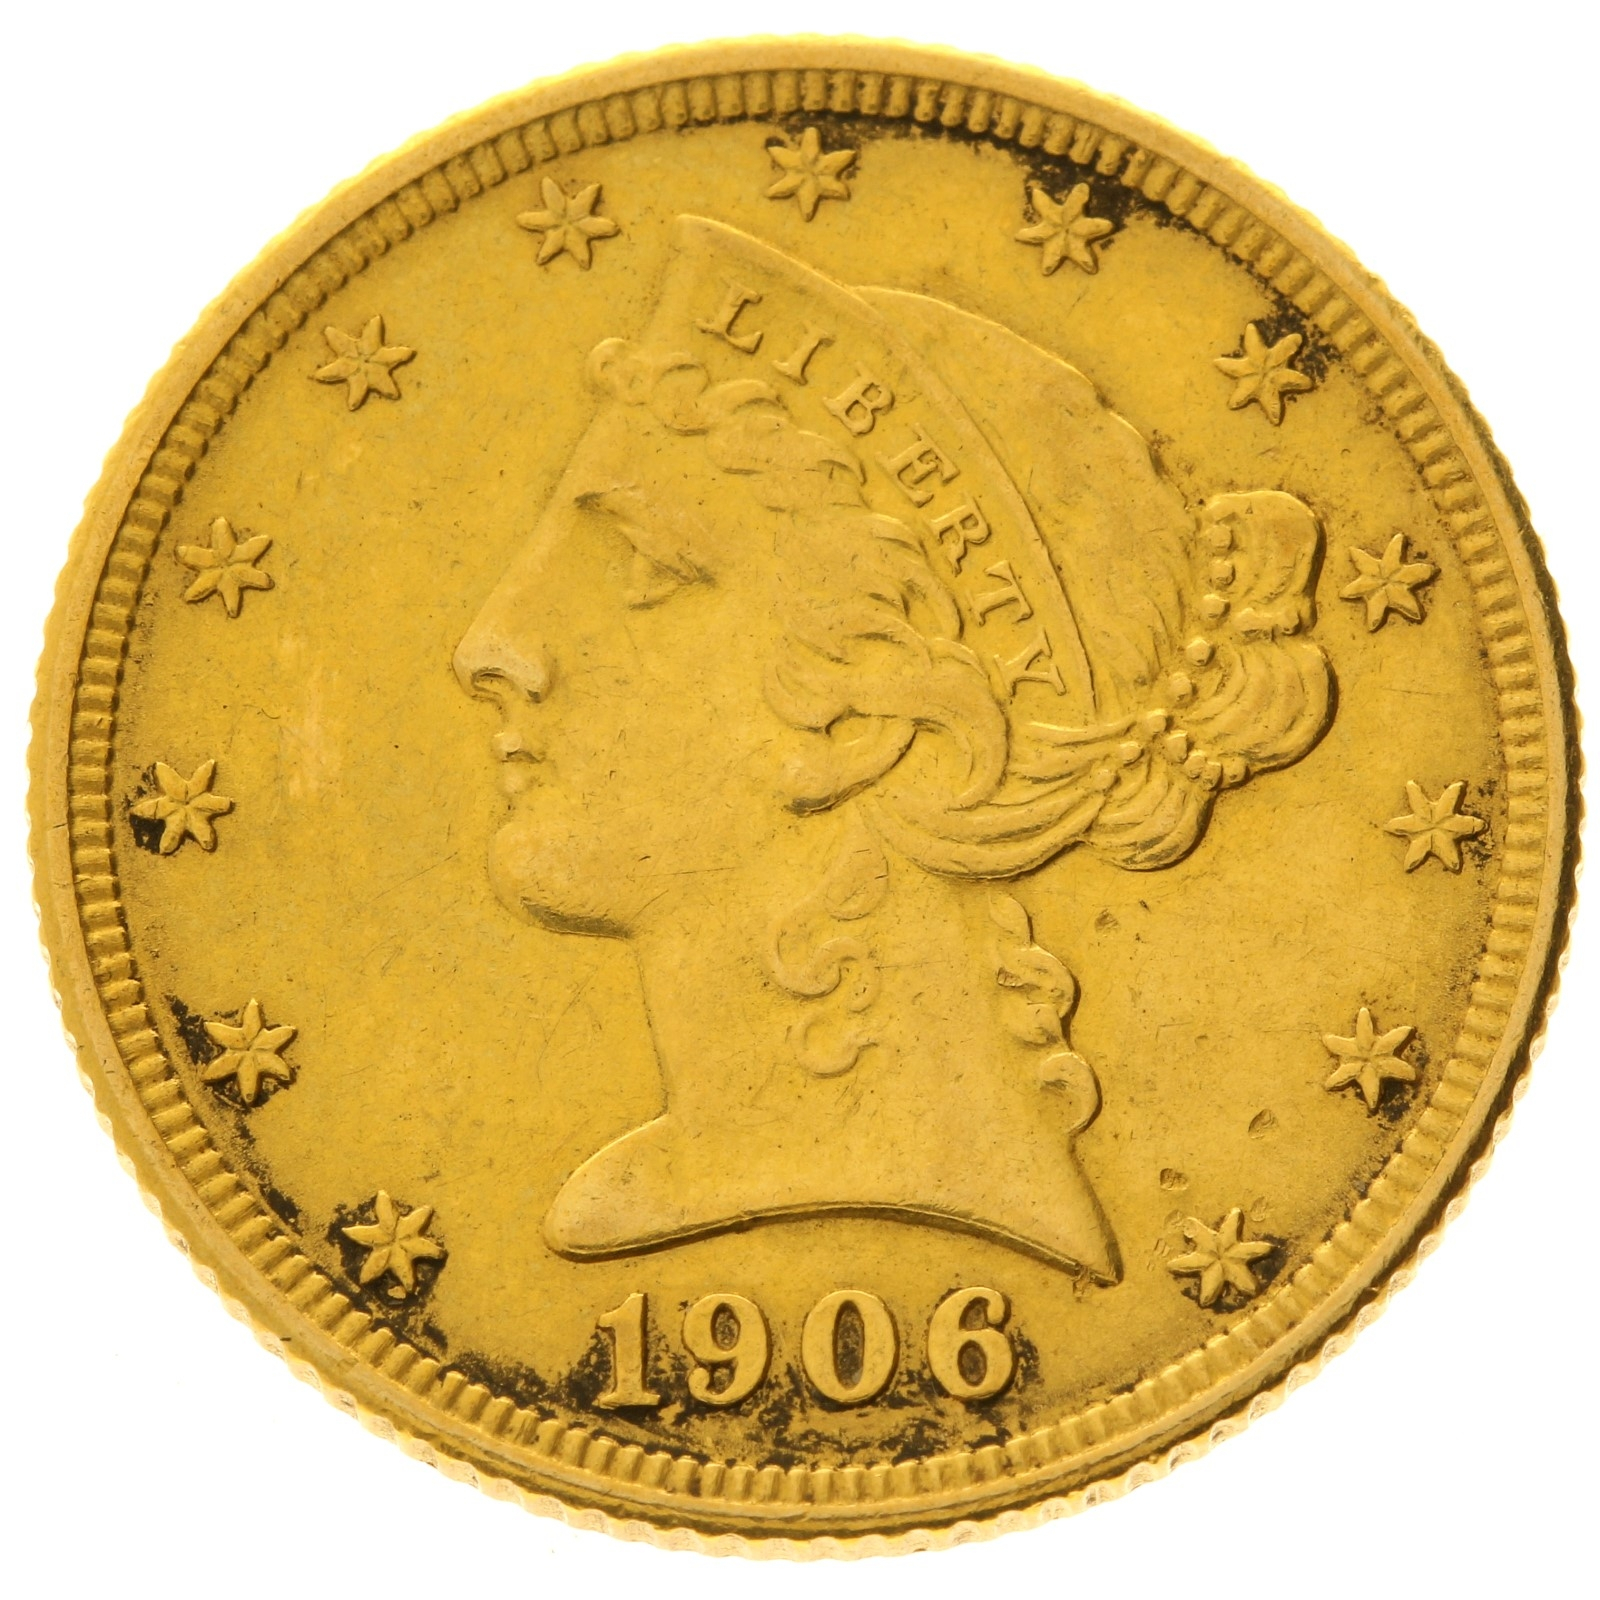 USA - 5 dollars - 1906 - D - Liberty / Coronet Head